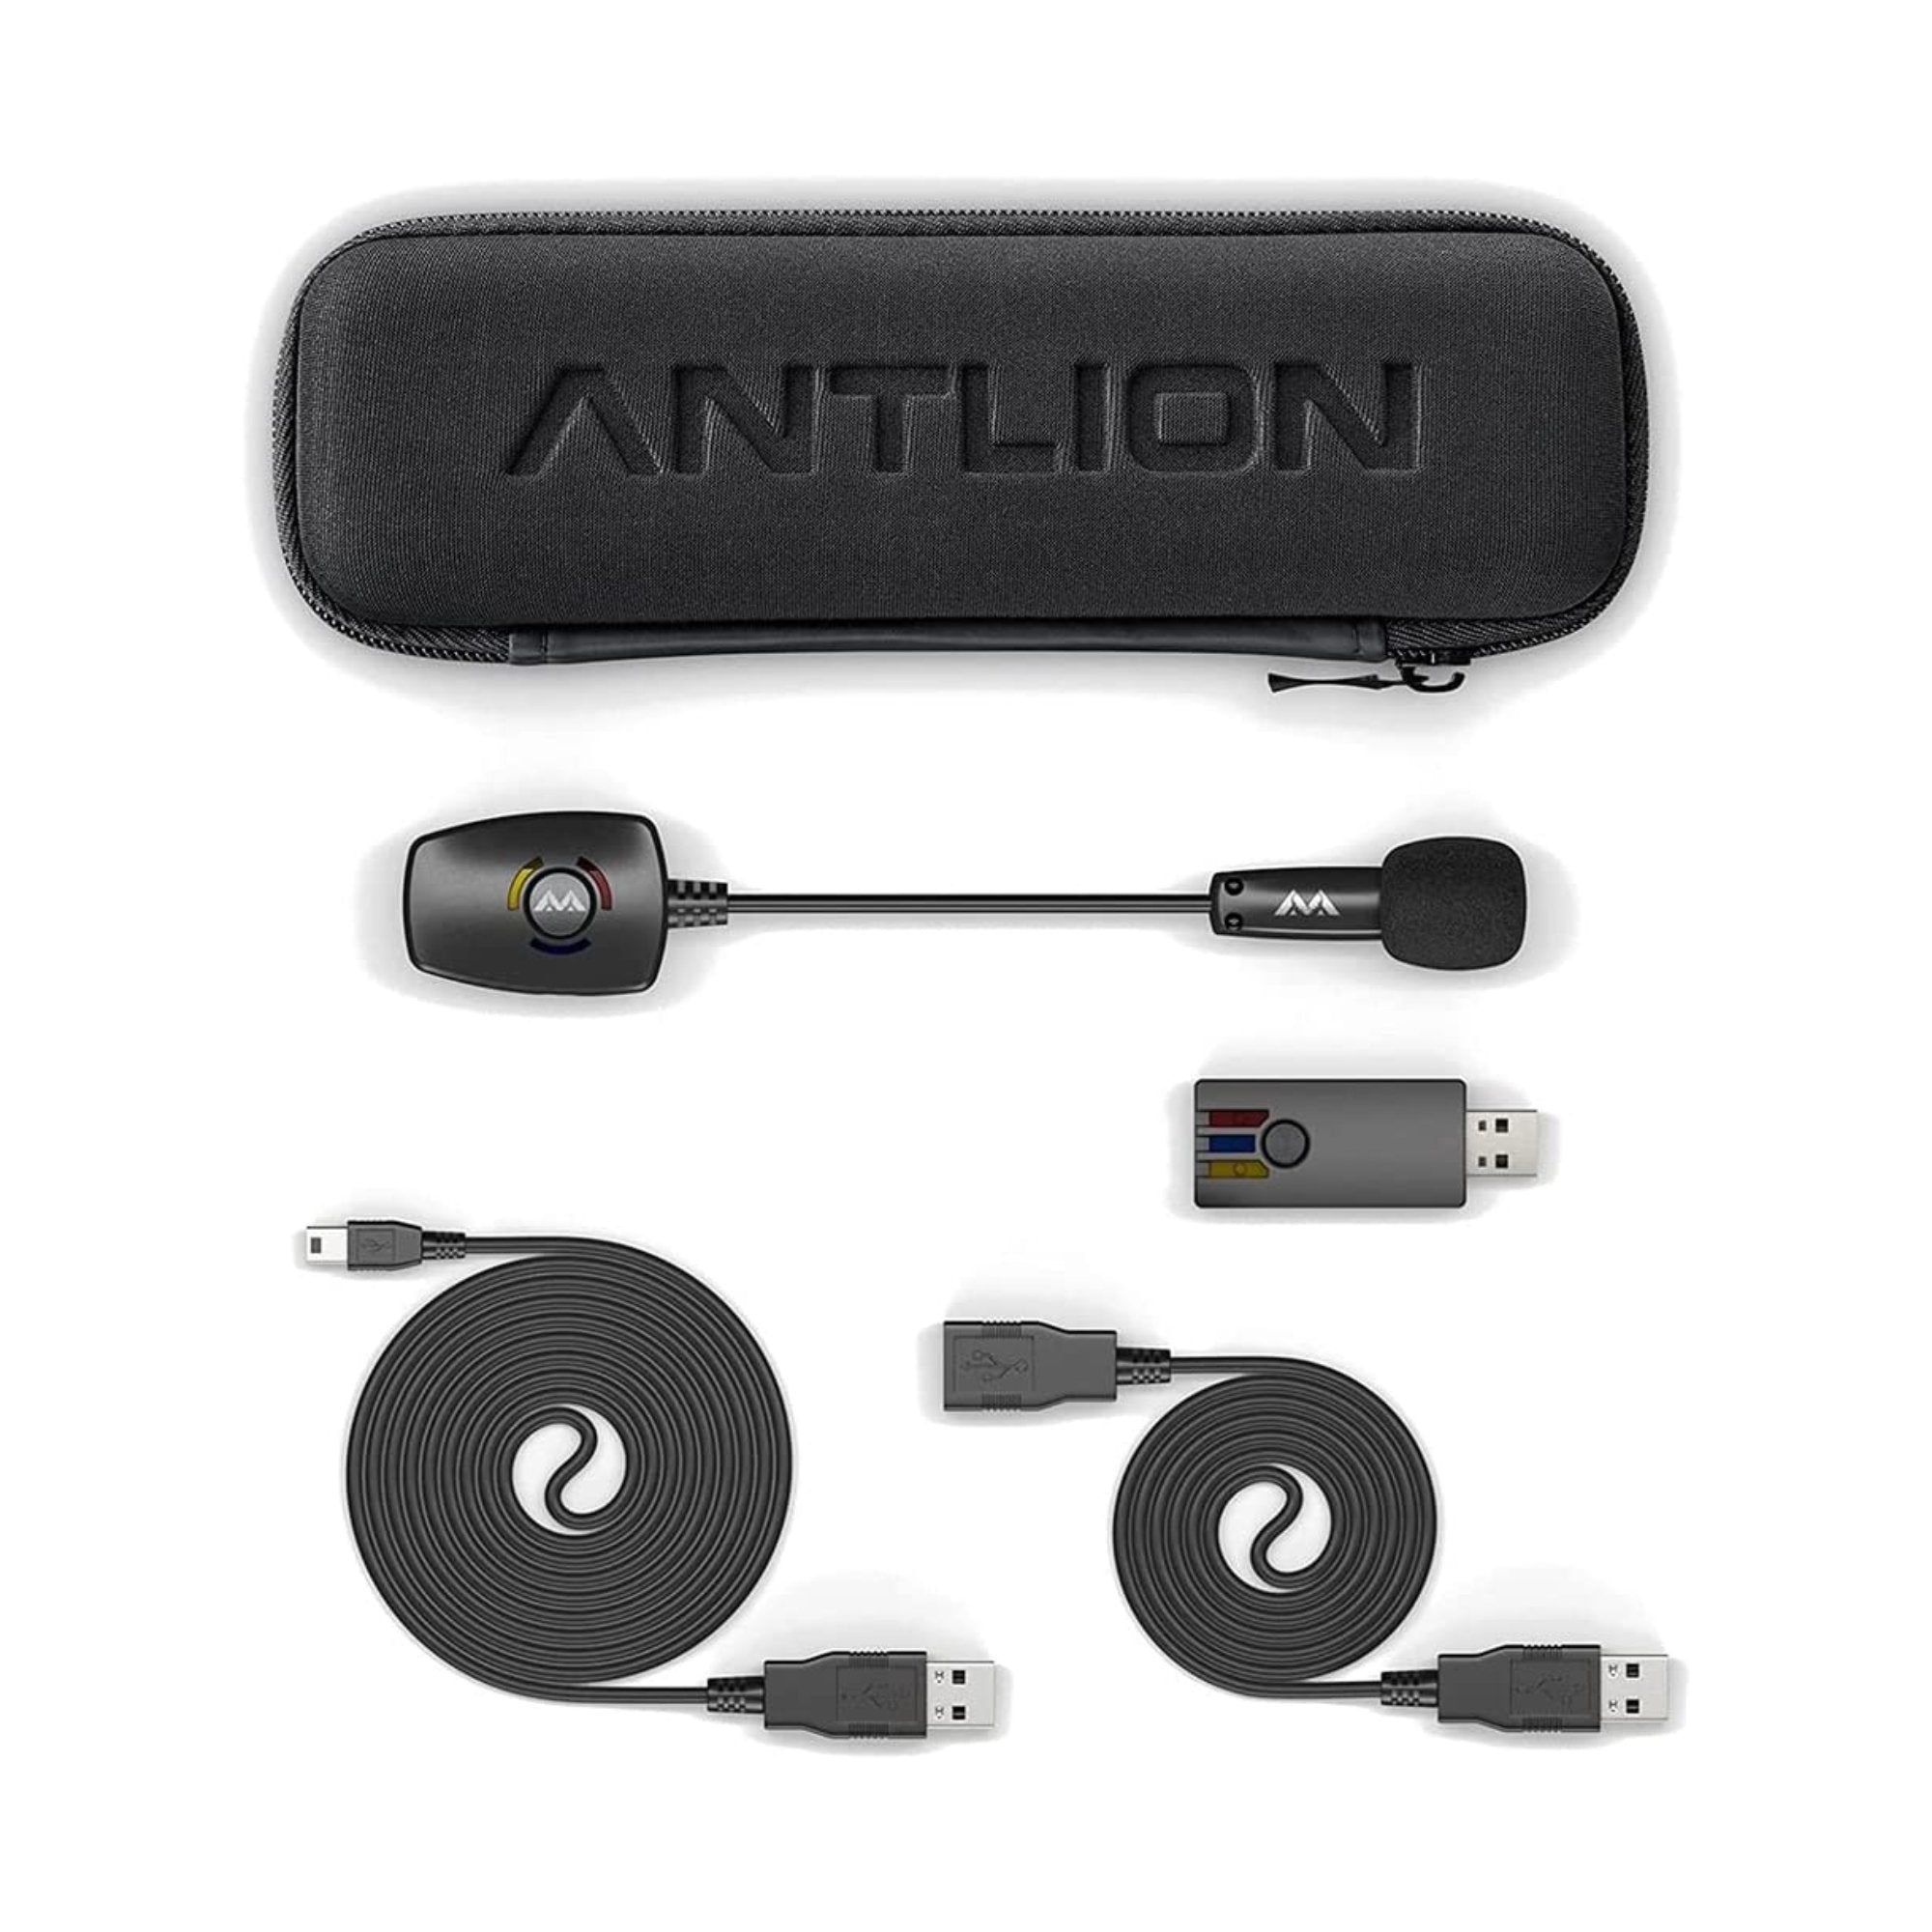 Antlion ModMic USB Wireless Microphone - Headset Advisor